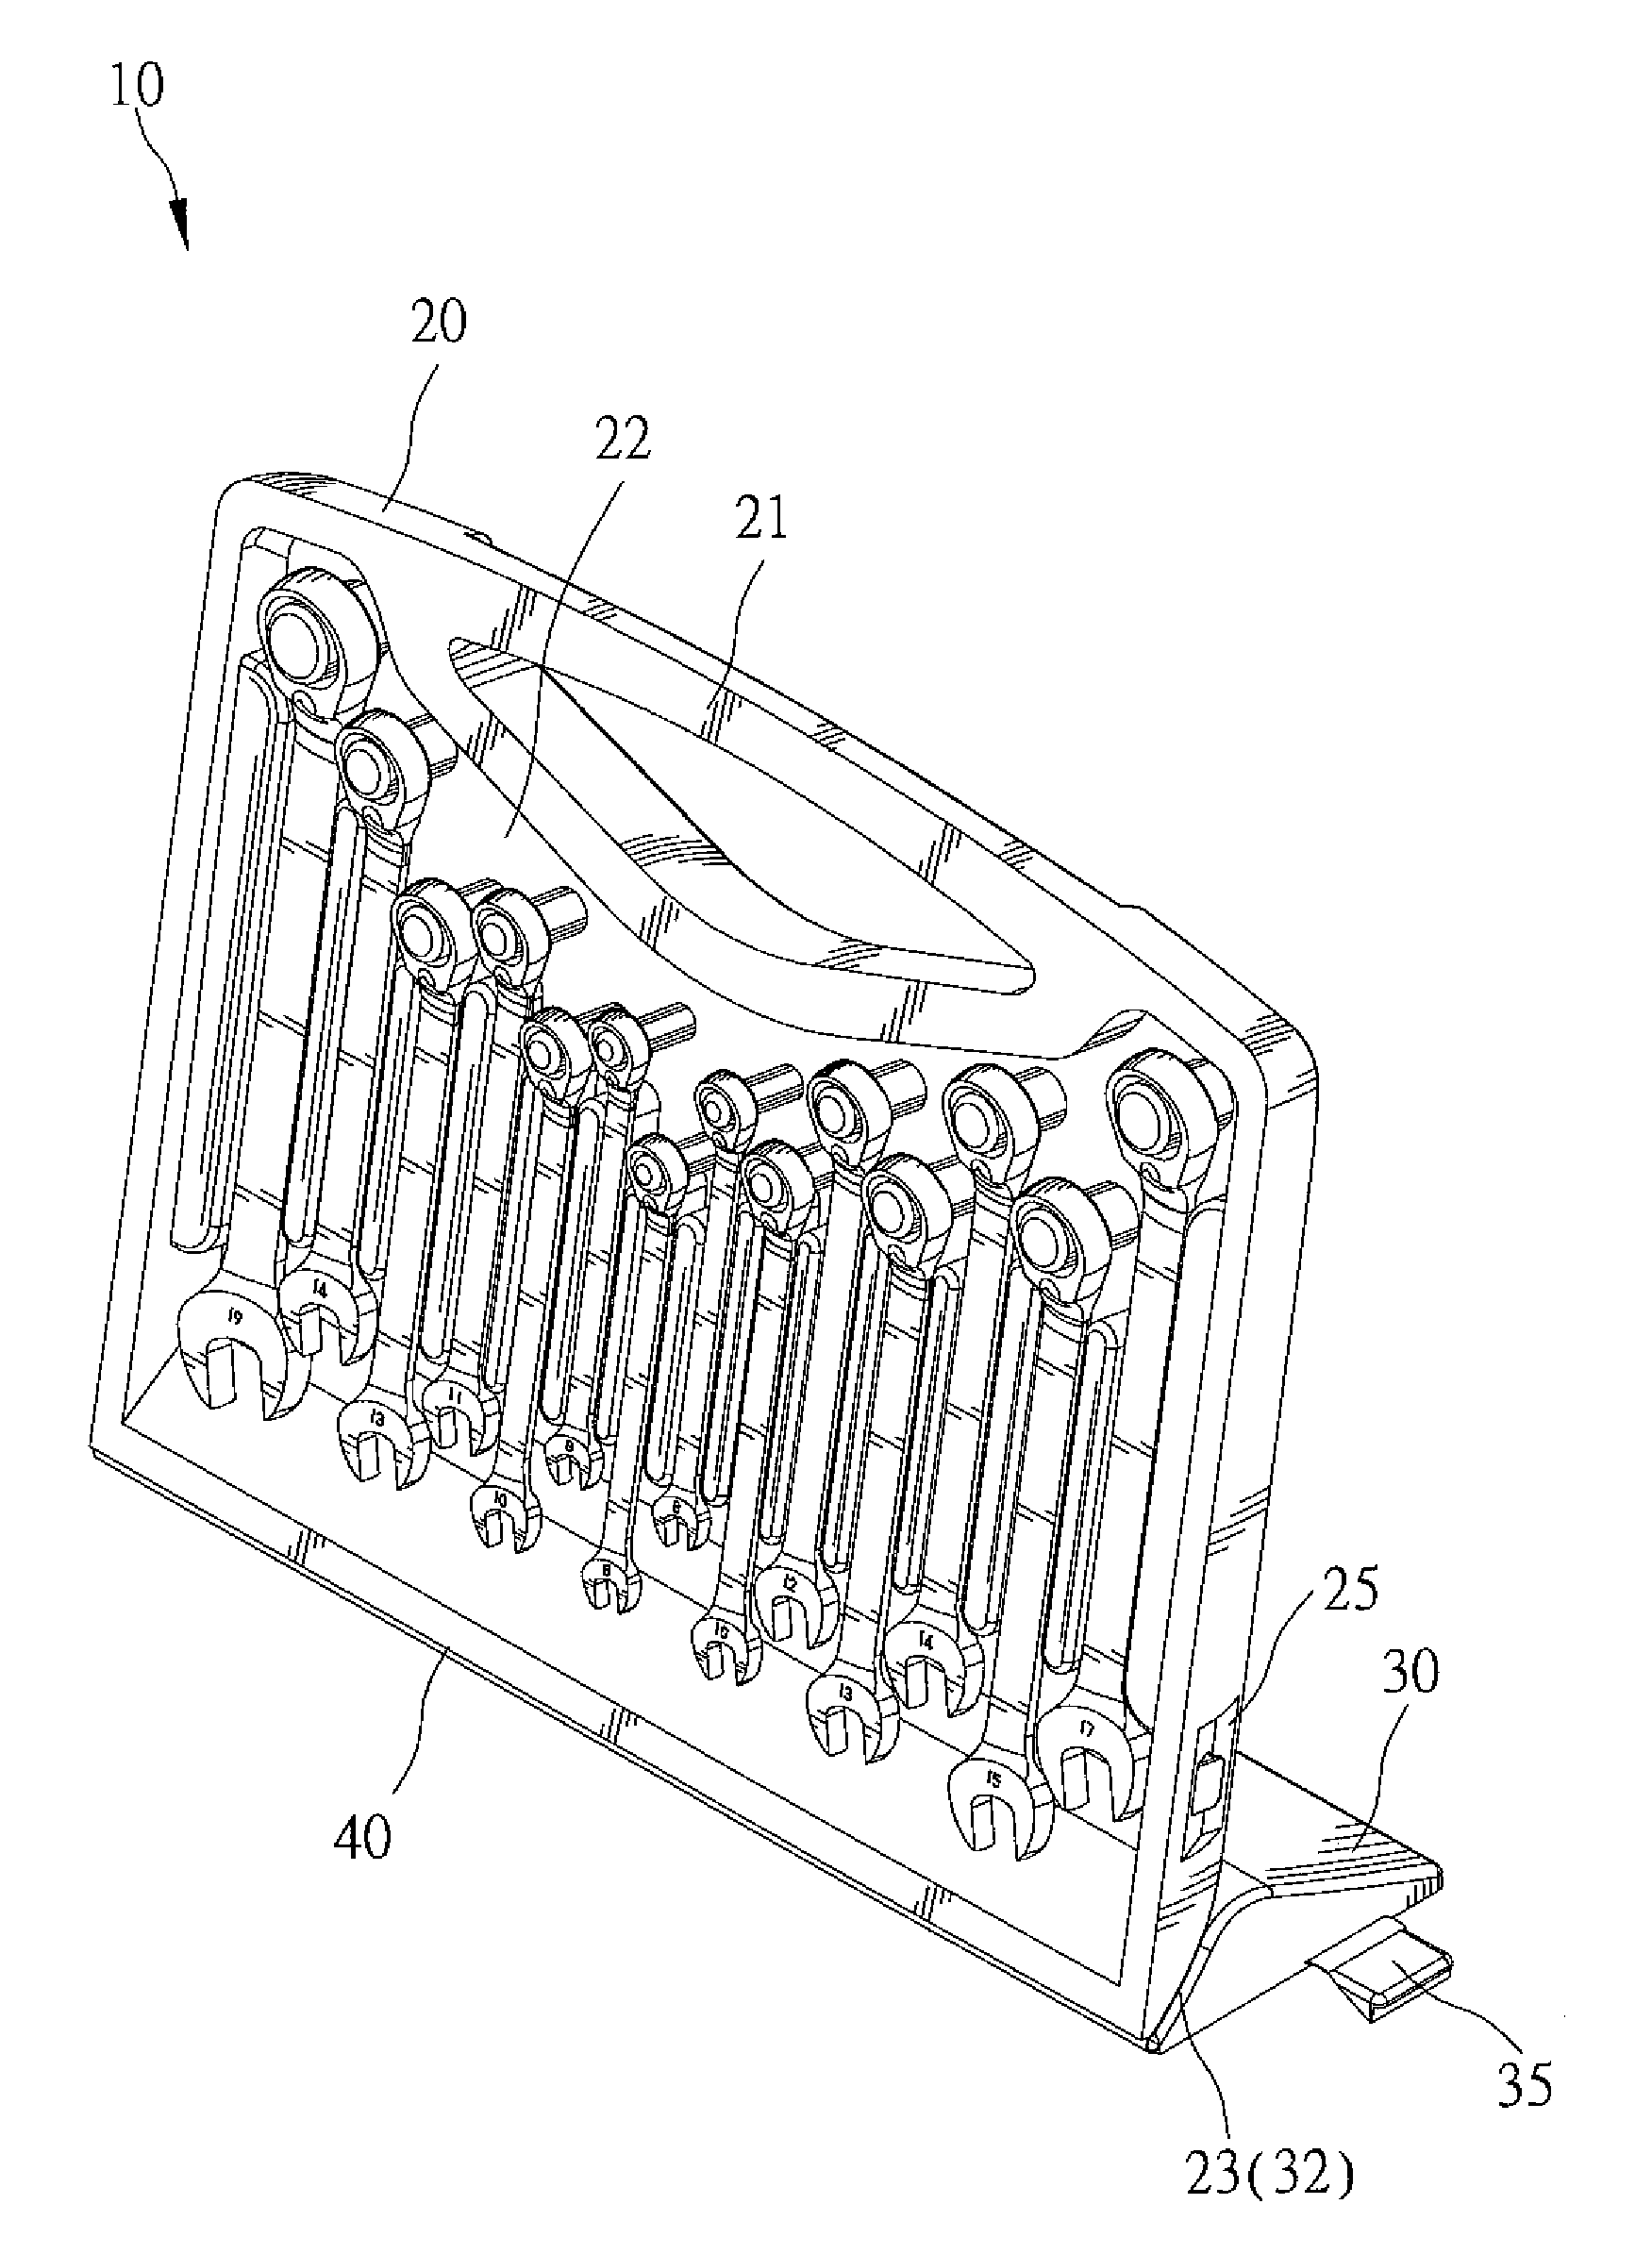 Toolbox apparatus